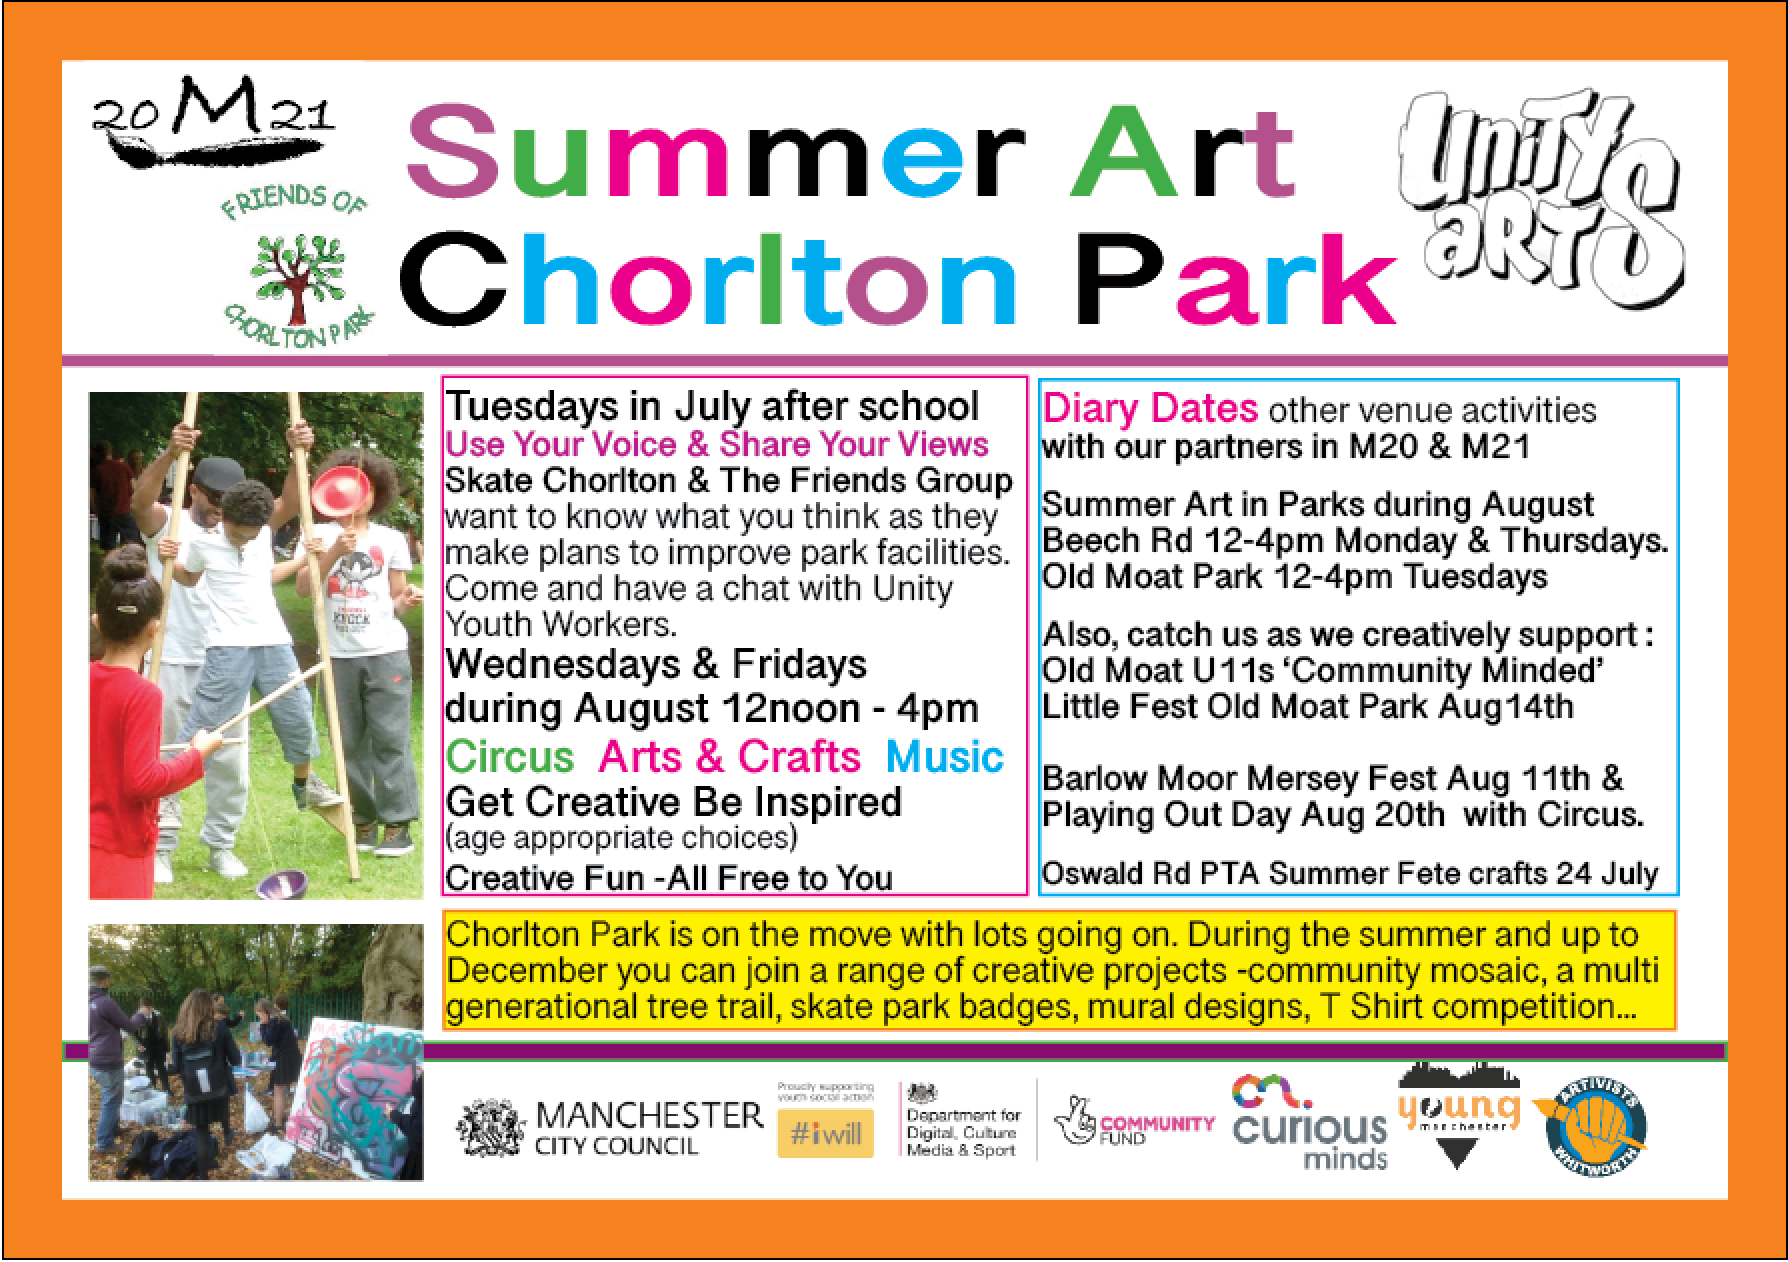 Summer Art at Chorlton Park